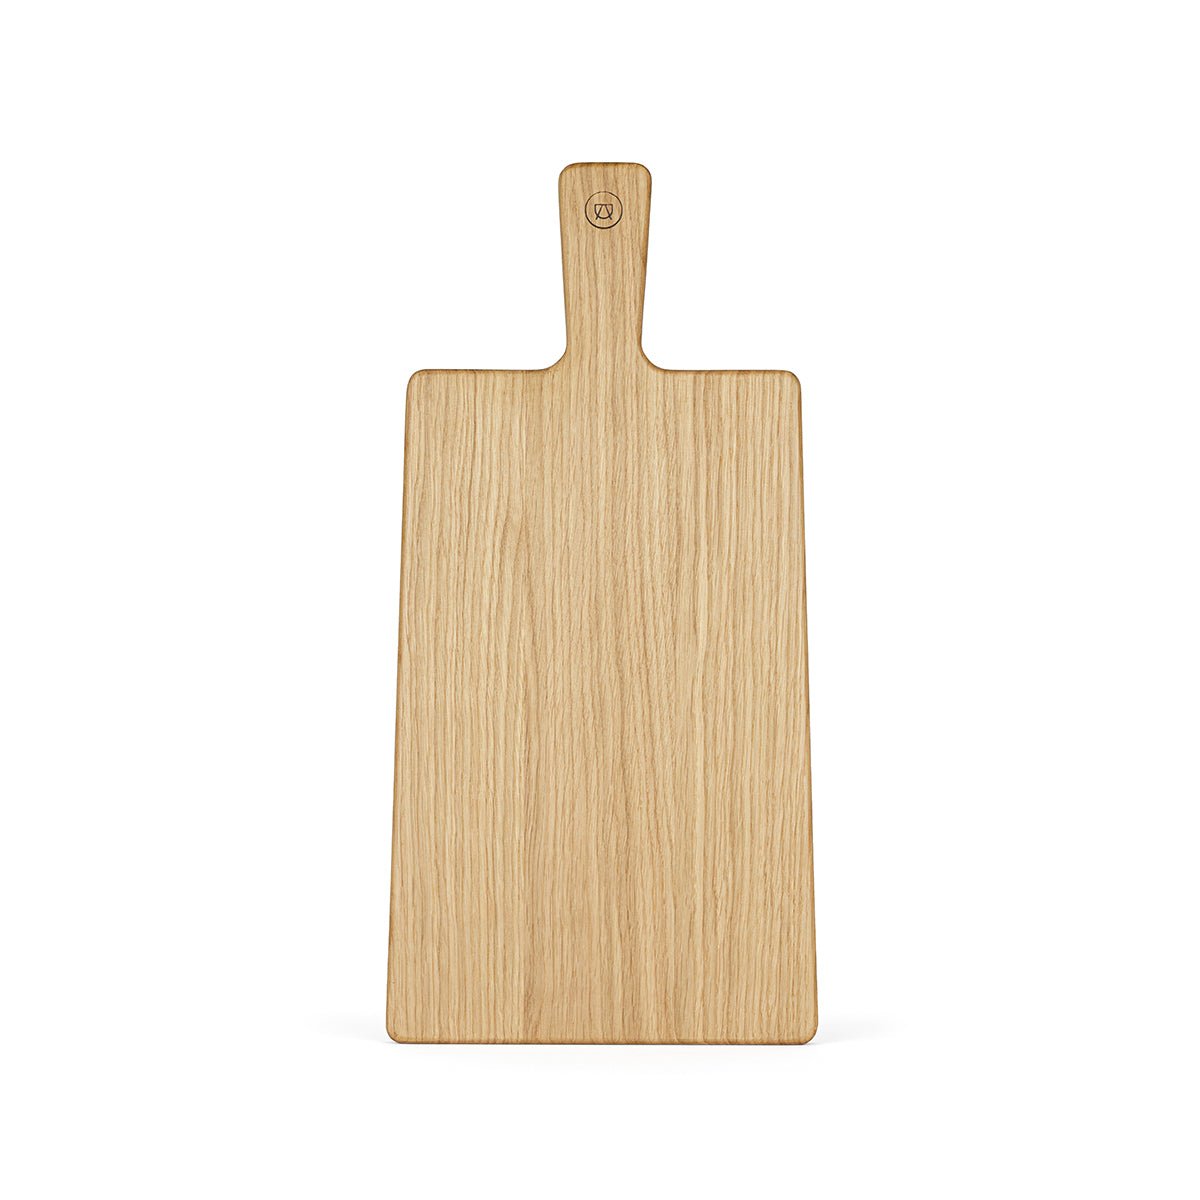 Stylish luxury - cutting board and serving board »Leni« made of oak wood